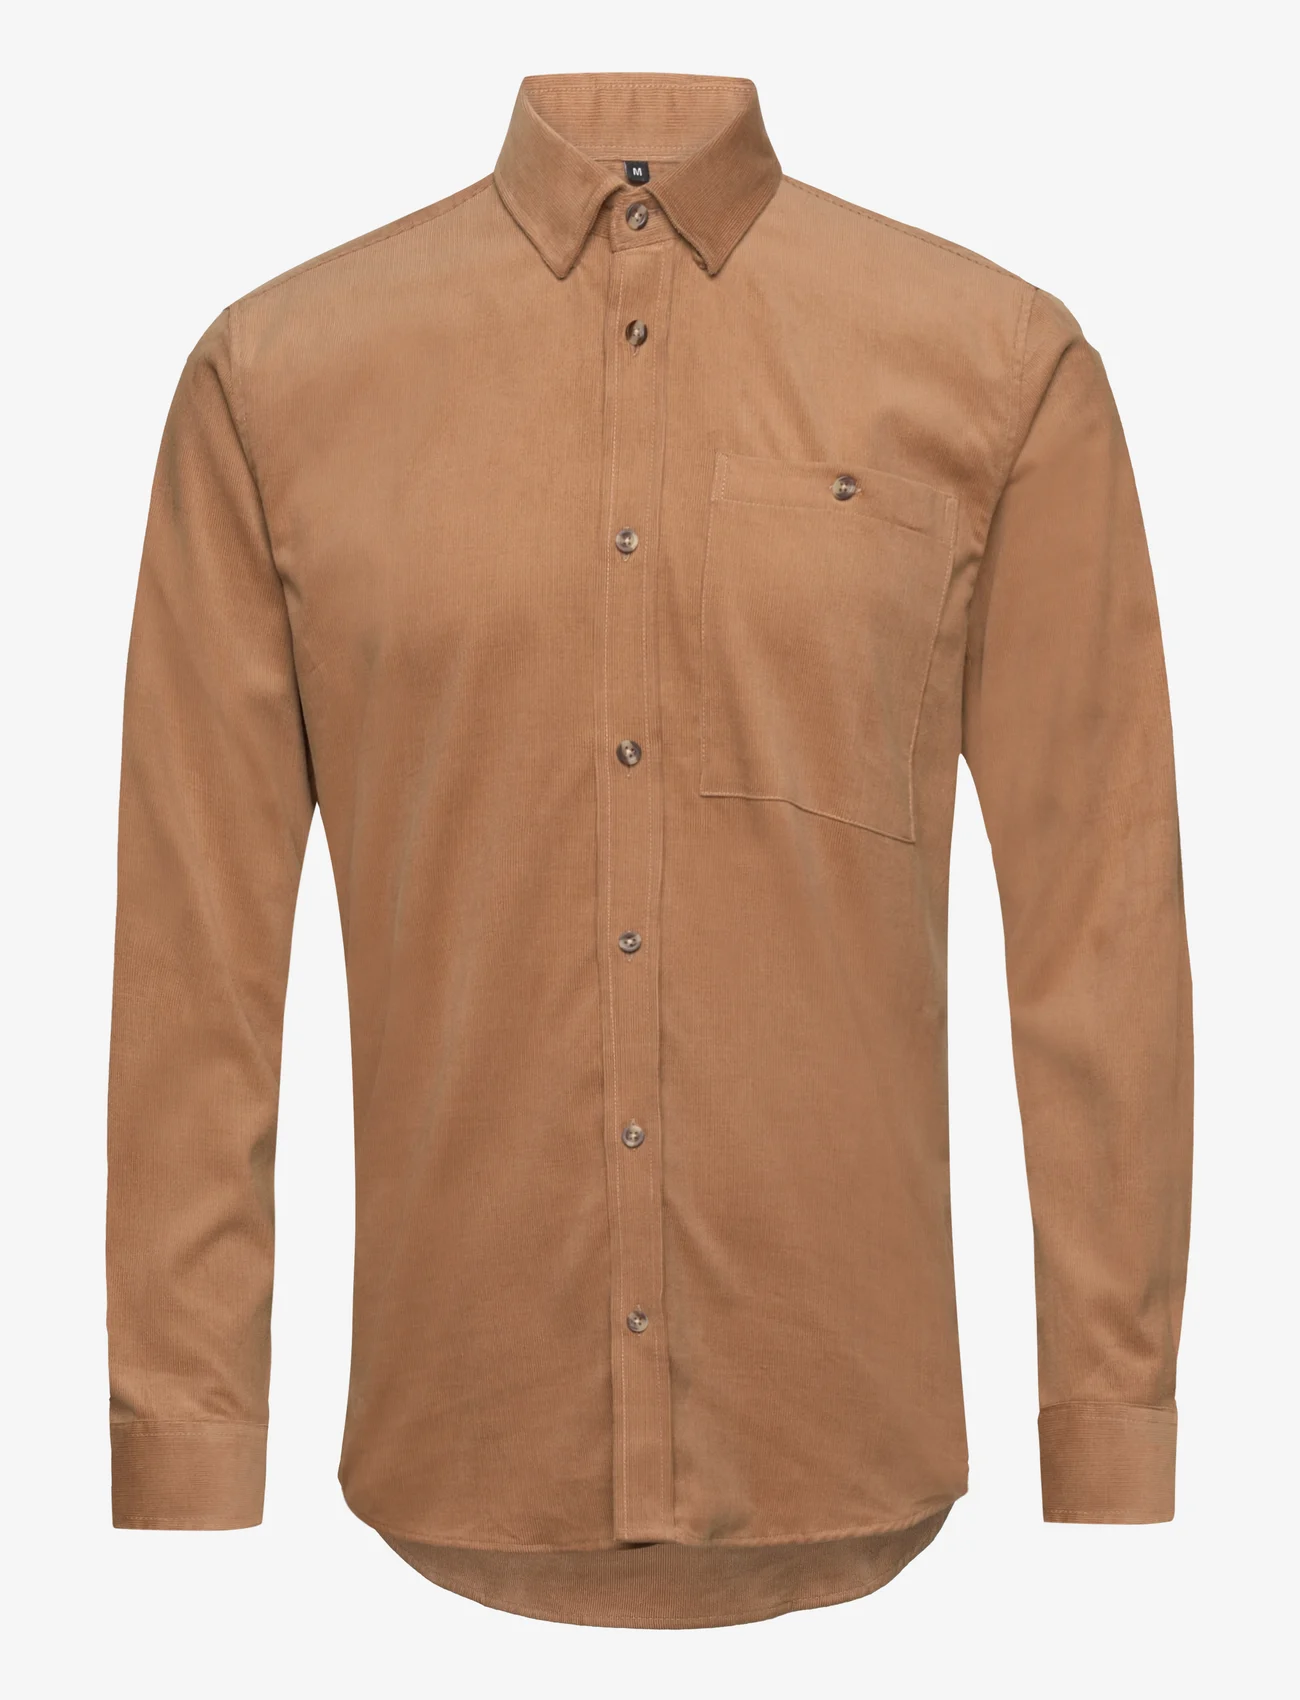 Bruuns Bazaar - CordBBStoke shirt - cordhemden - seal brown - 0